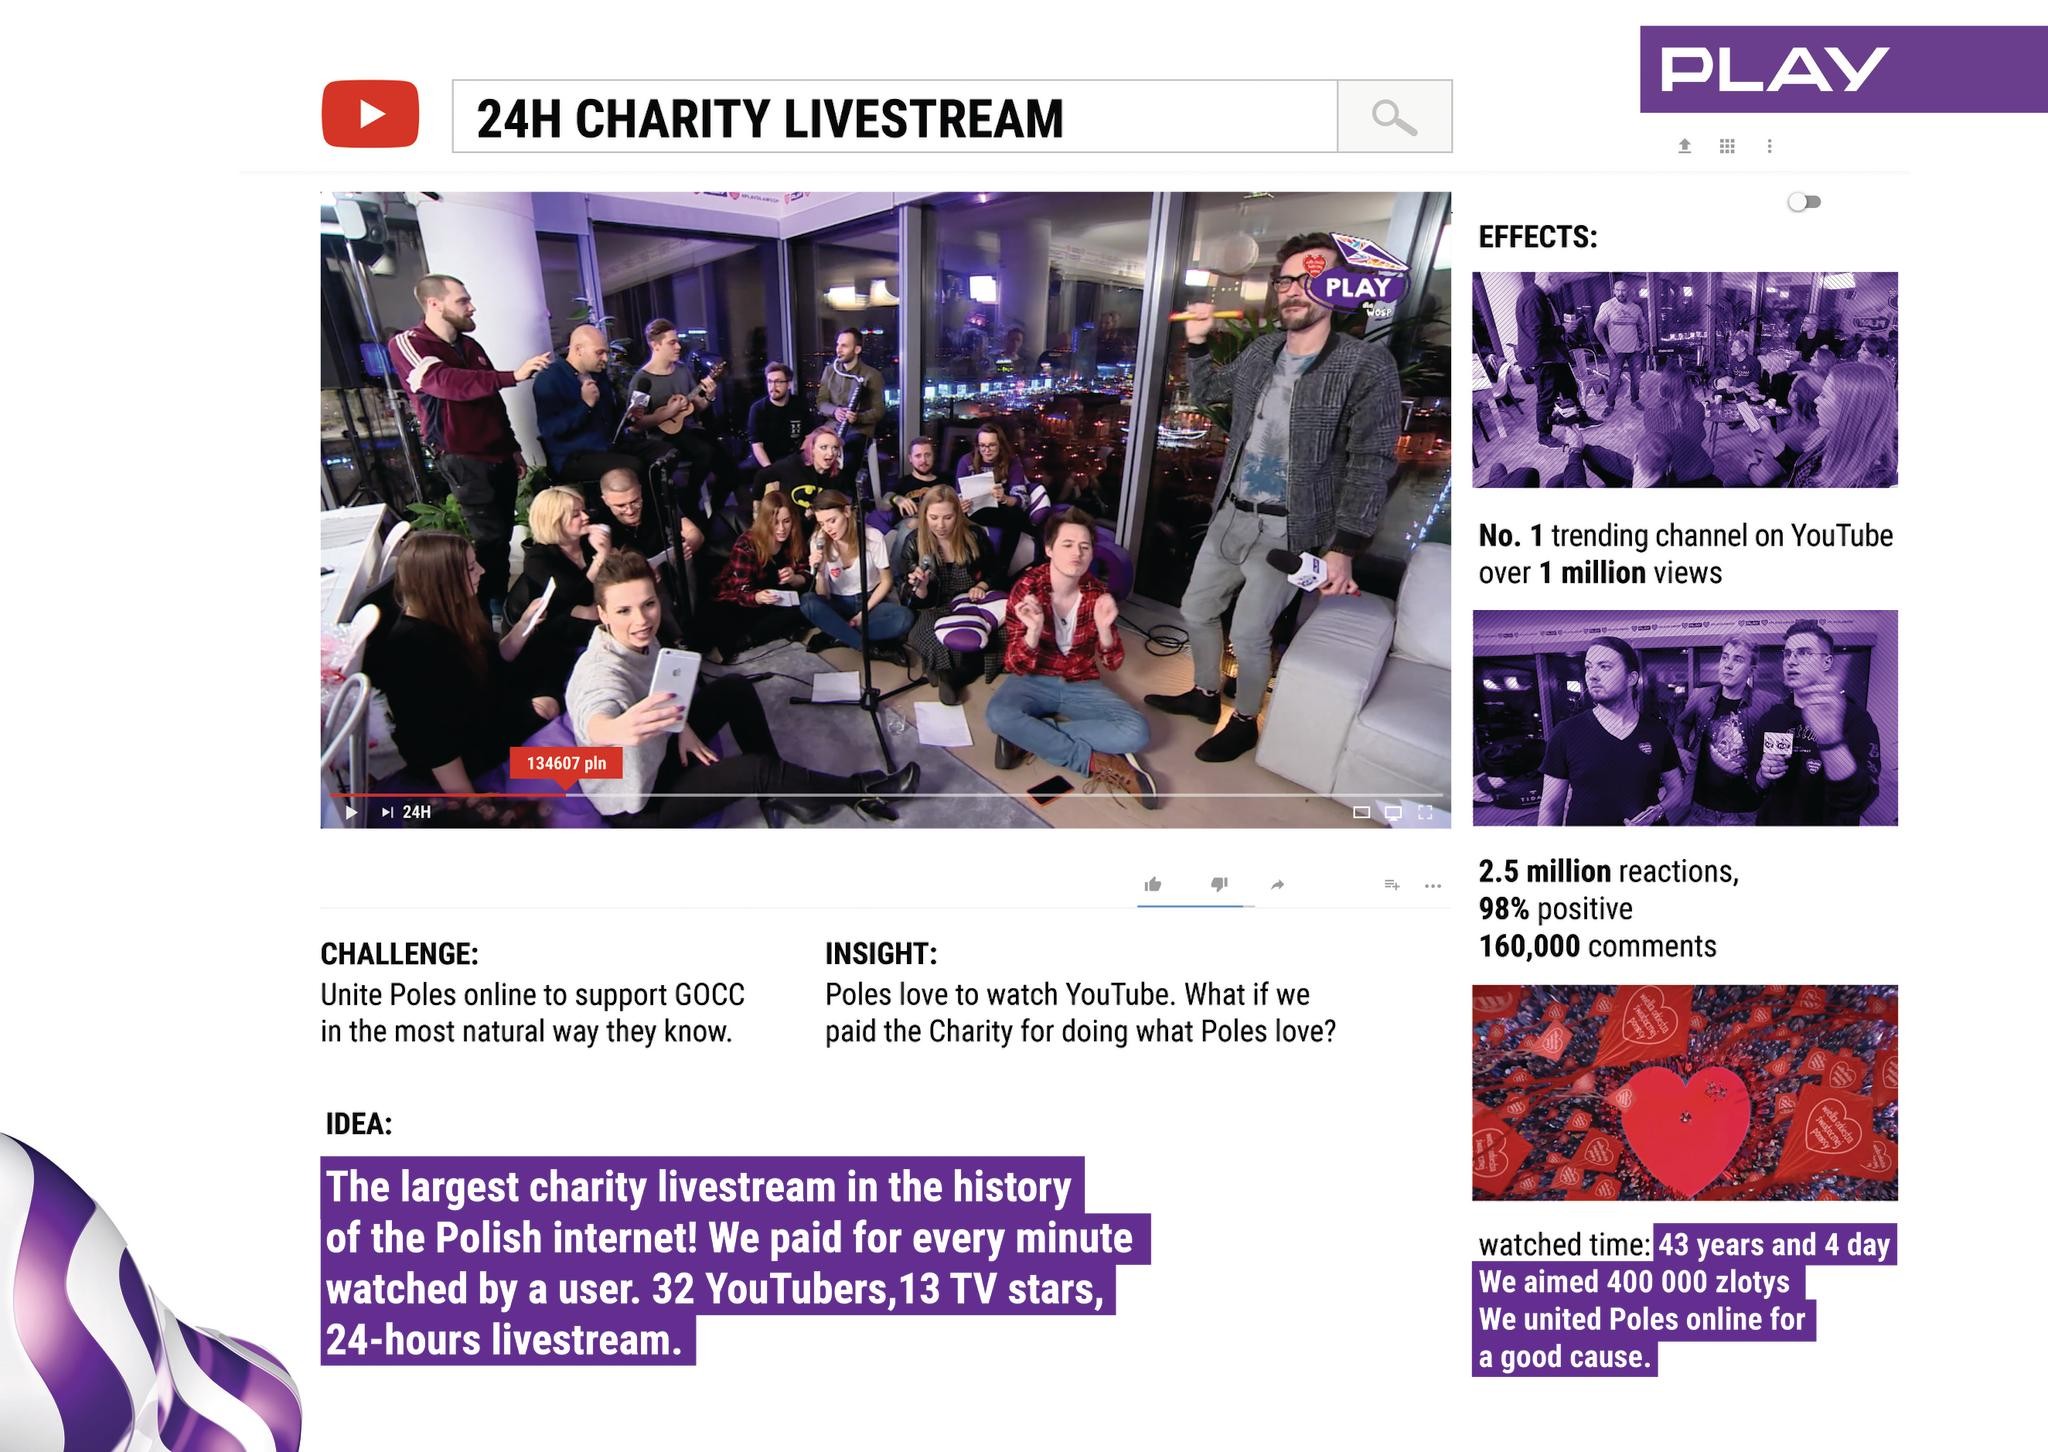 24h Charity Livestream